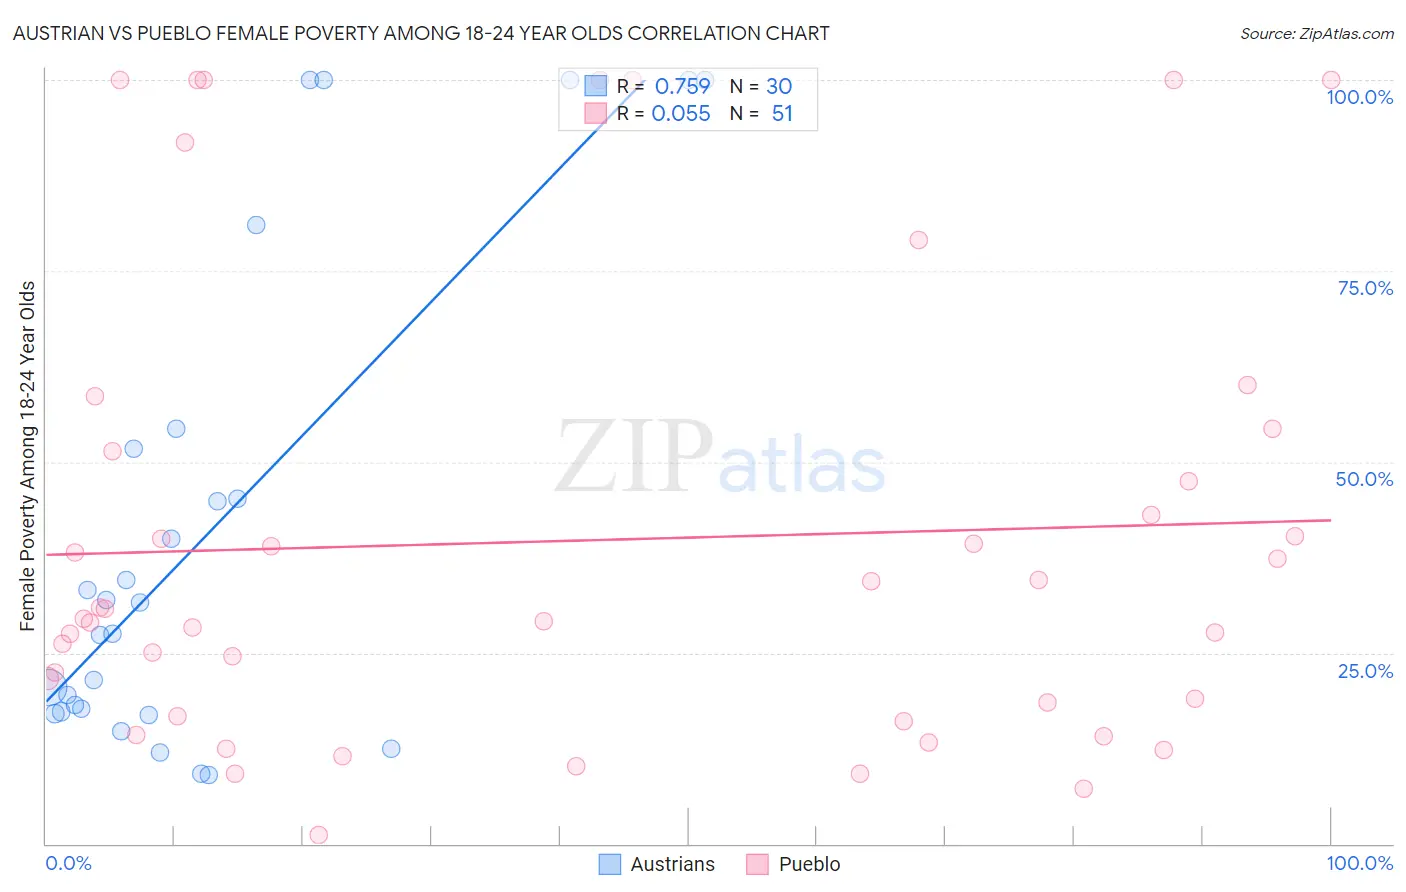 Austrian vs Pueblo Female Poverty Among 18-24 Year Olds